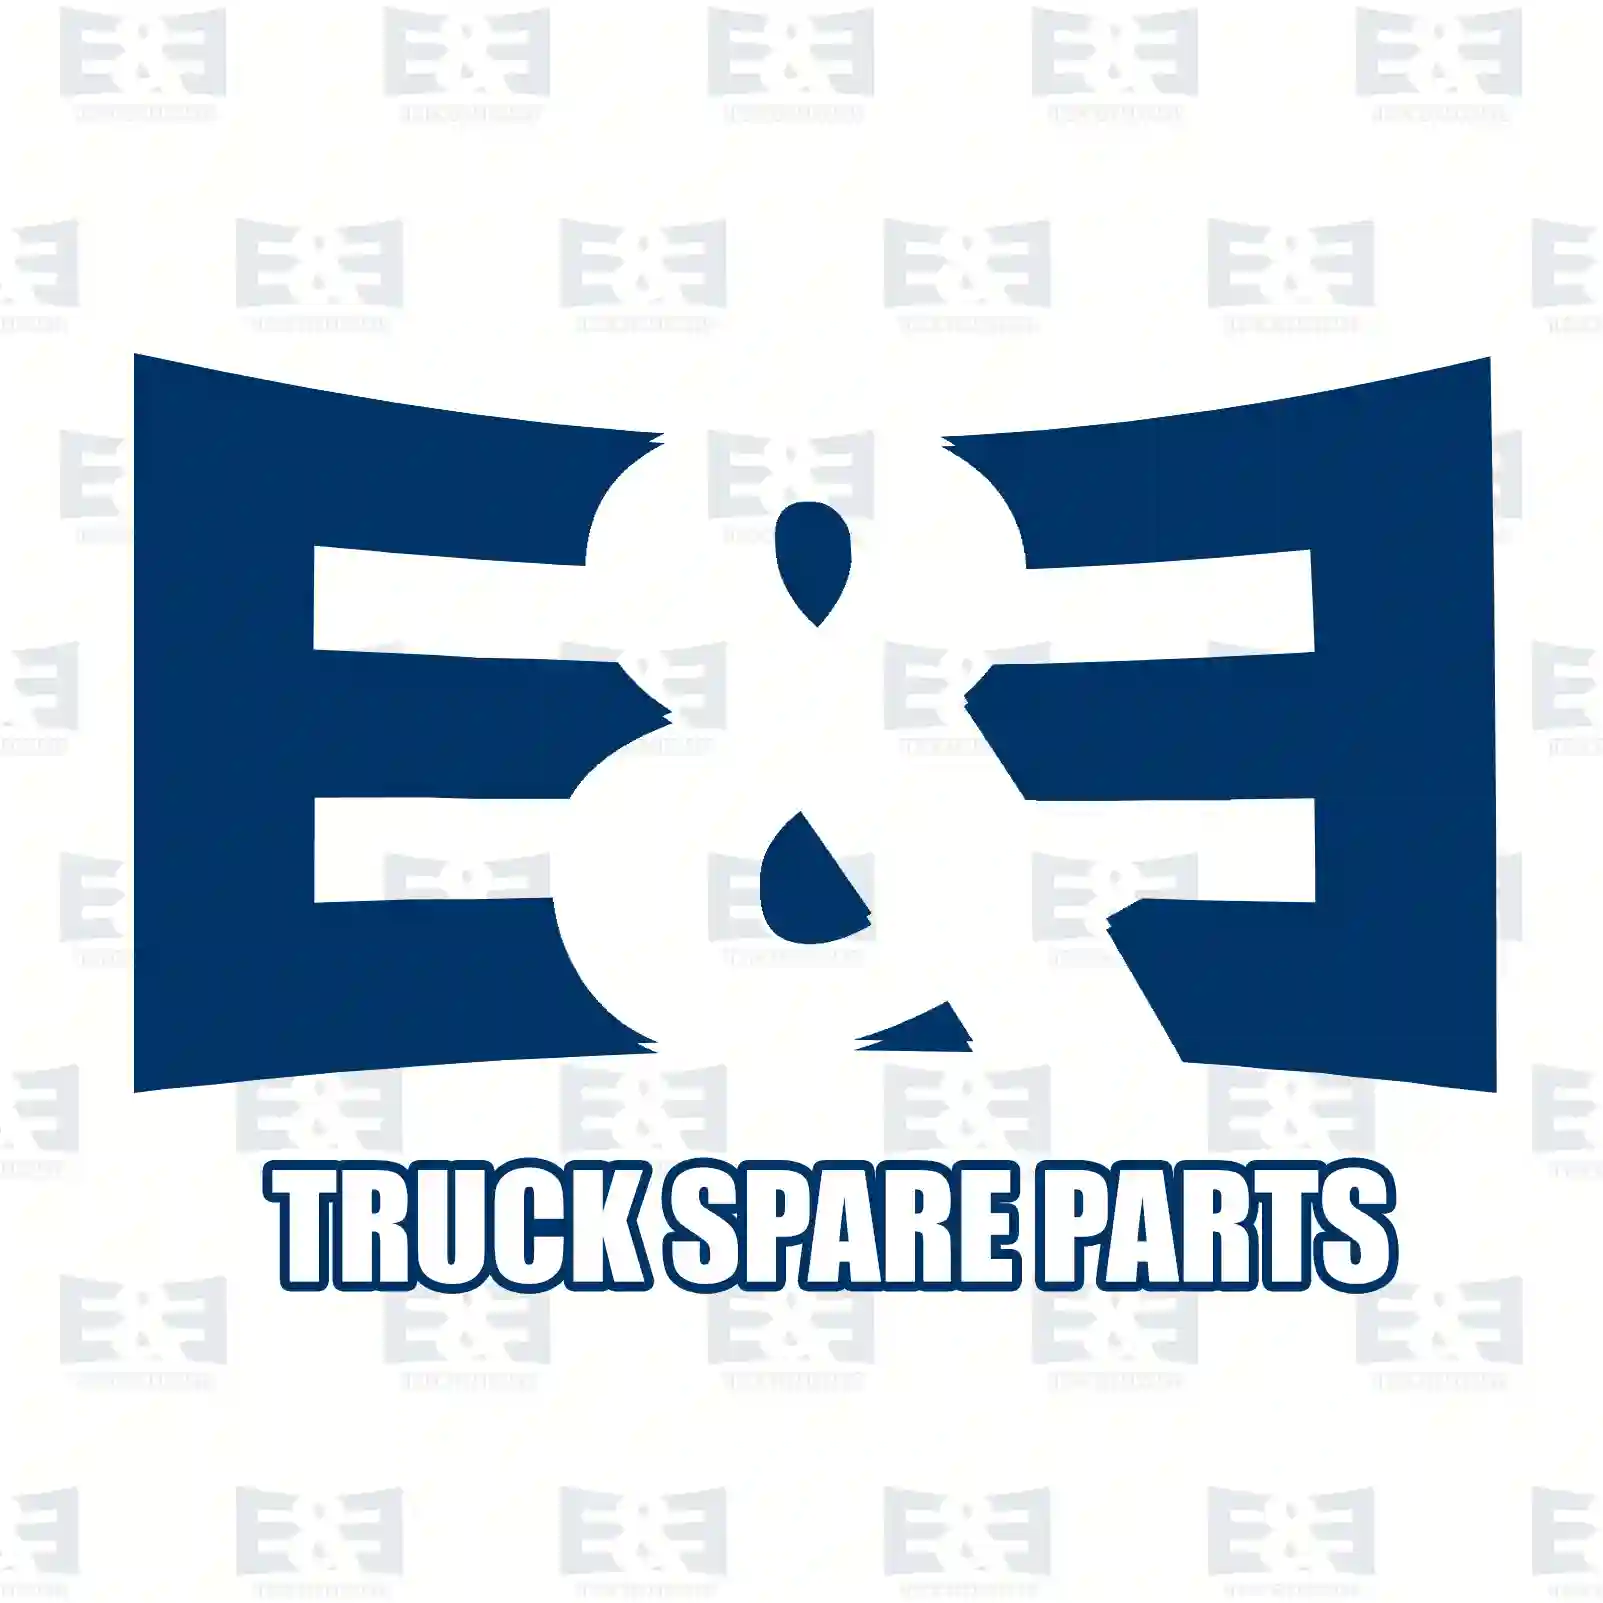 4/2-way valve, 2E2278904, 0643603, 1329122, 643603, 643603A, 643603R, 42531588, 81327346024, 81521706127, 0022603657, 5000455081, 5001839206, 1662798, 3099422, 6774463, ZG50974-0008 ||  2E2278904 E&E Truck Spare Parts | Truck Spare Parts, Auotomotive Spare Parts 4/2-way valve, 2E2278904, 0643603, 1329122, 643603, 643603A, 643603R, 42531588, 81327346024, 81521706127, 0022603657, 5000455081, 5001839206, 1662798, 3099422, 6774463, ZG50974-0008 ||  2E2278904 E&E Truck Spare Parts | Truck Spare Parts, Auotomotive Spare Parts